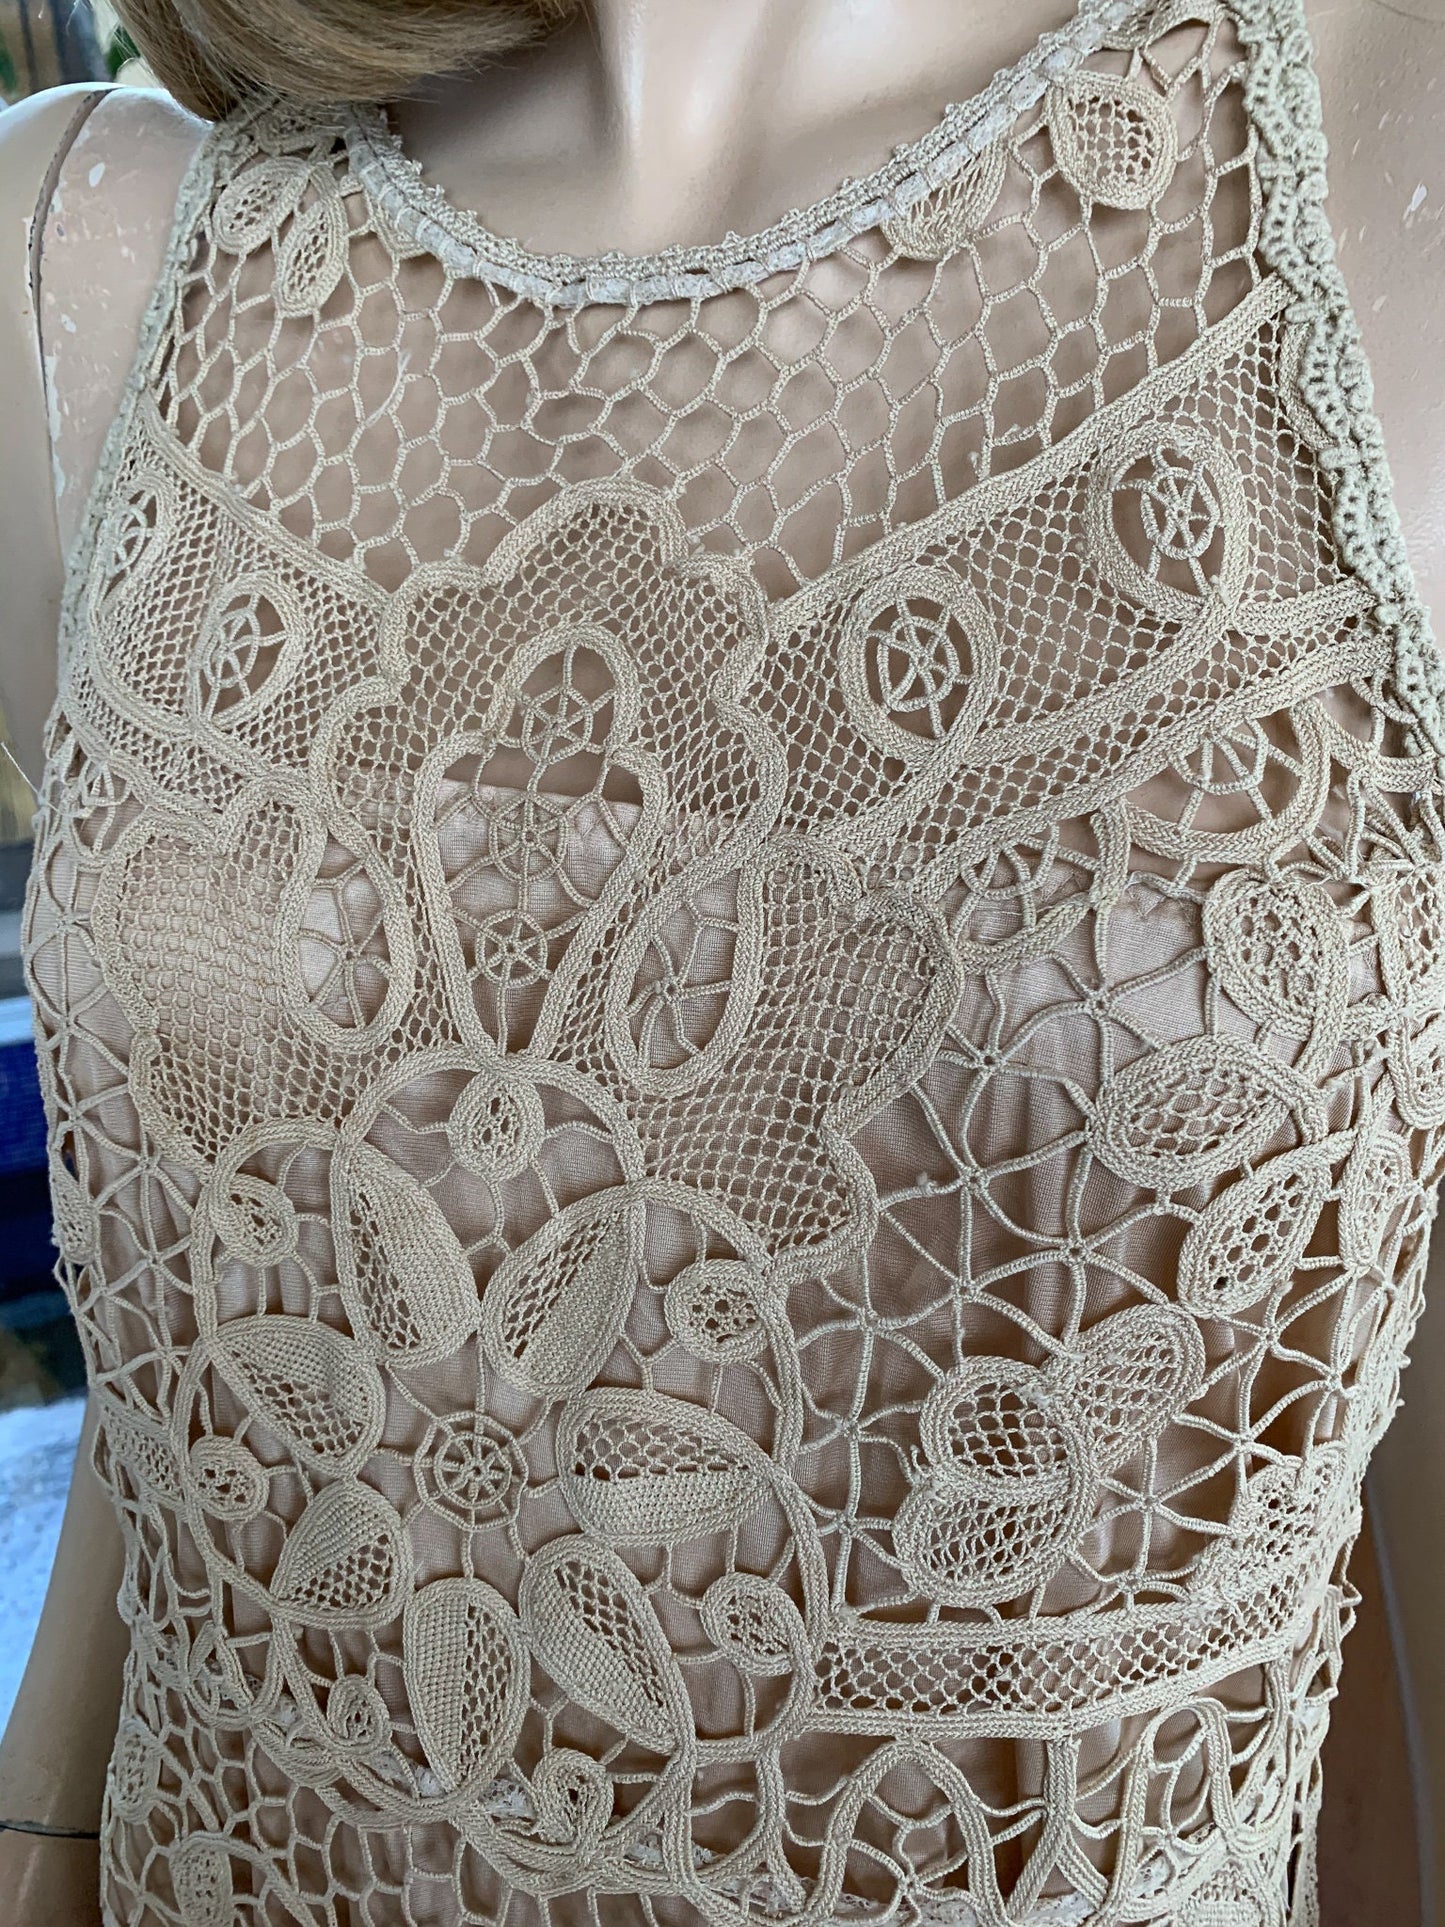 Needlepoint Lace Sleeveless Midi Dress